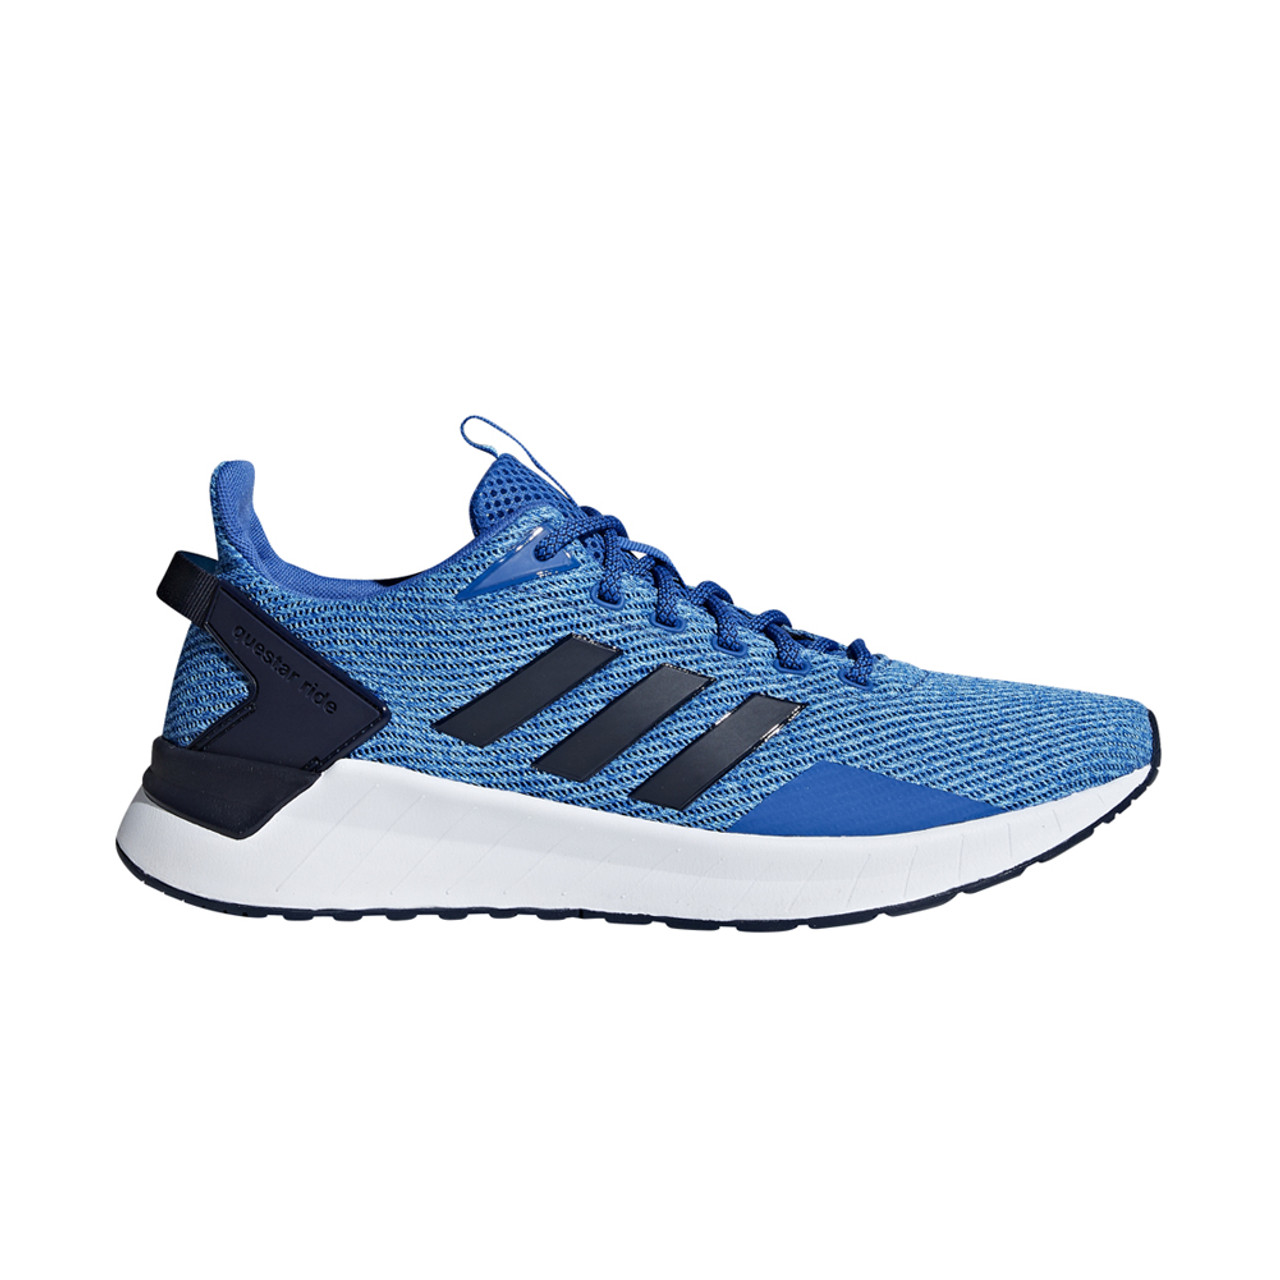 Adidas Men's Questar Ride Running Shoe - Blue | Discount Adidas Men's  Athletic Shoes & More - Shoolu.com | Shoolu.com